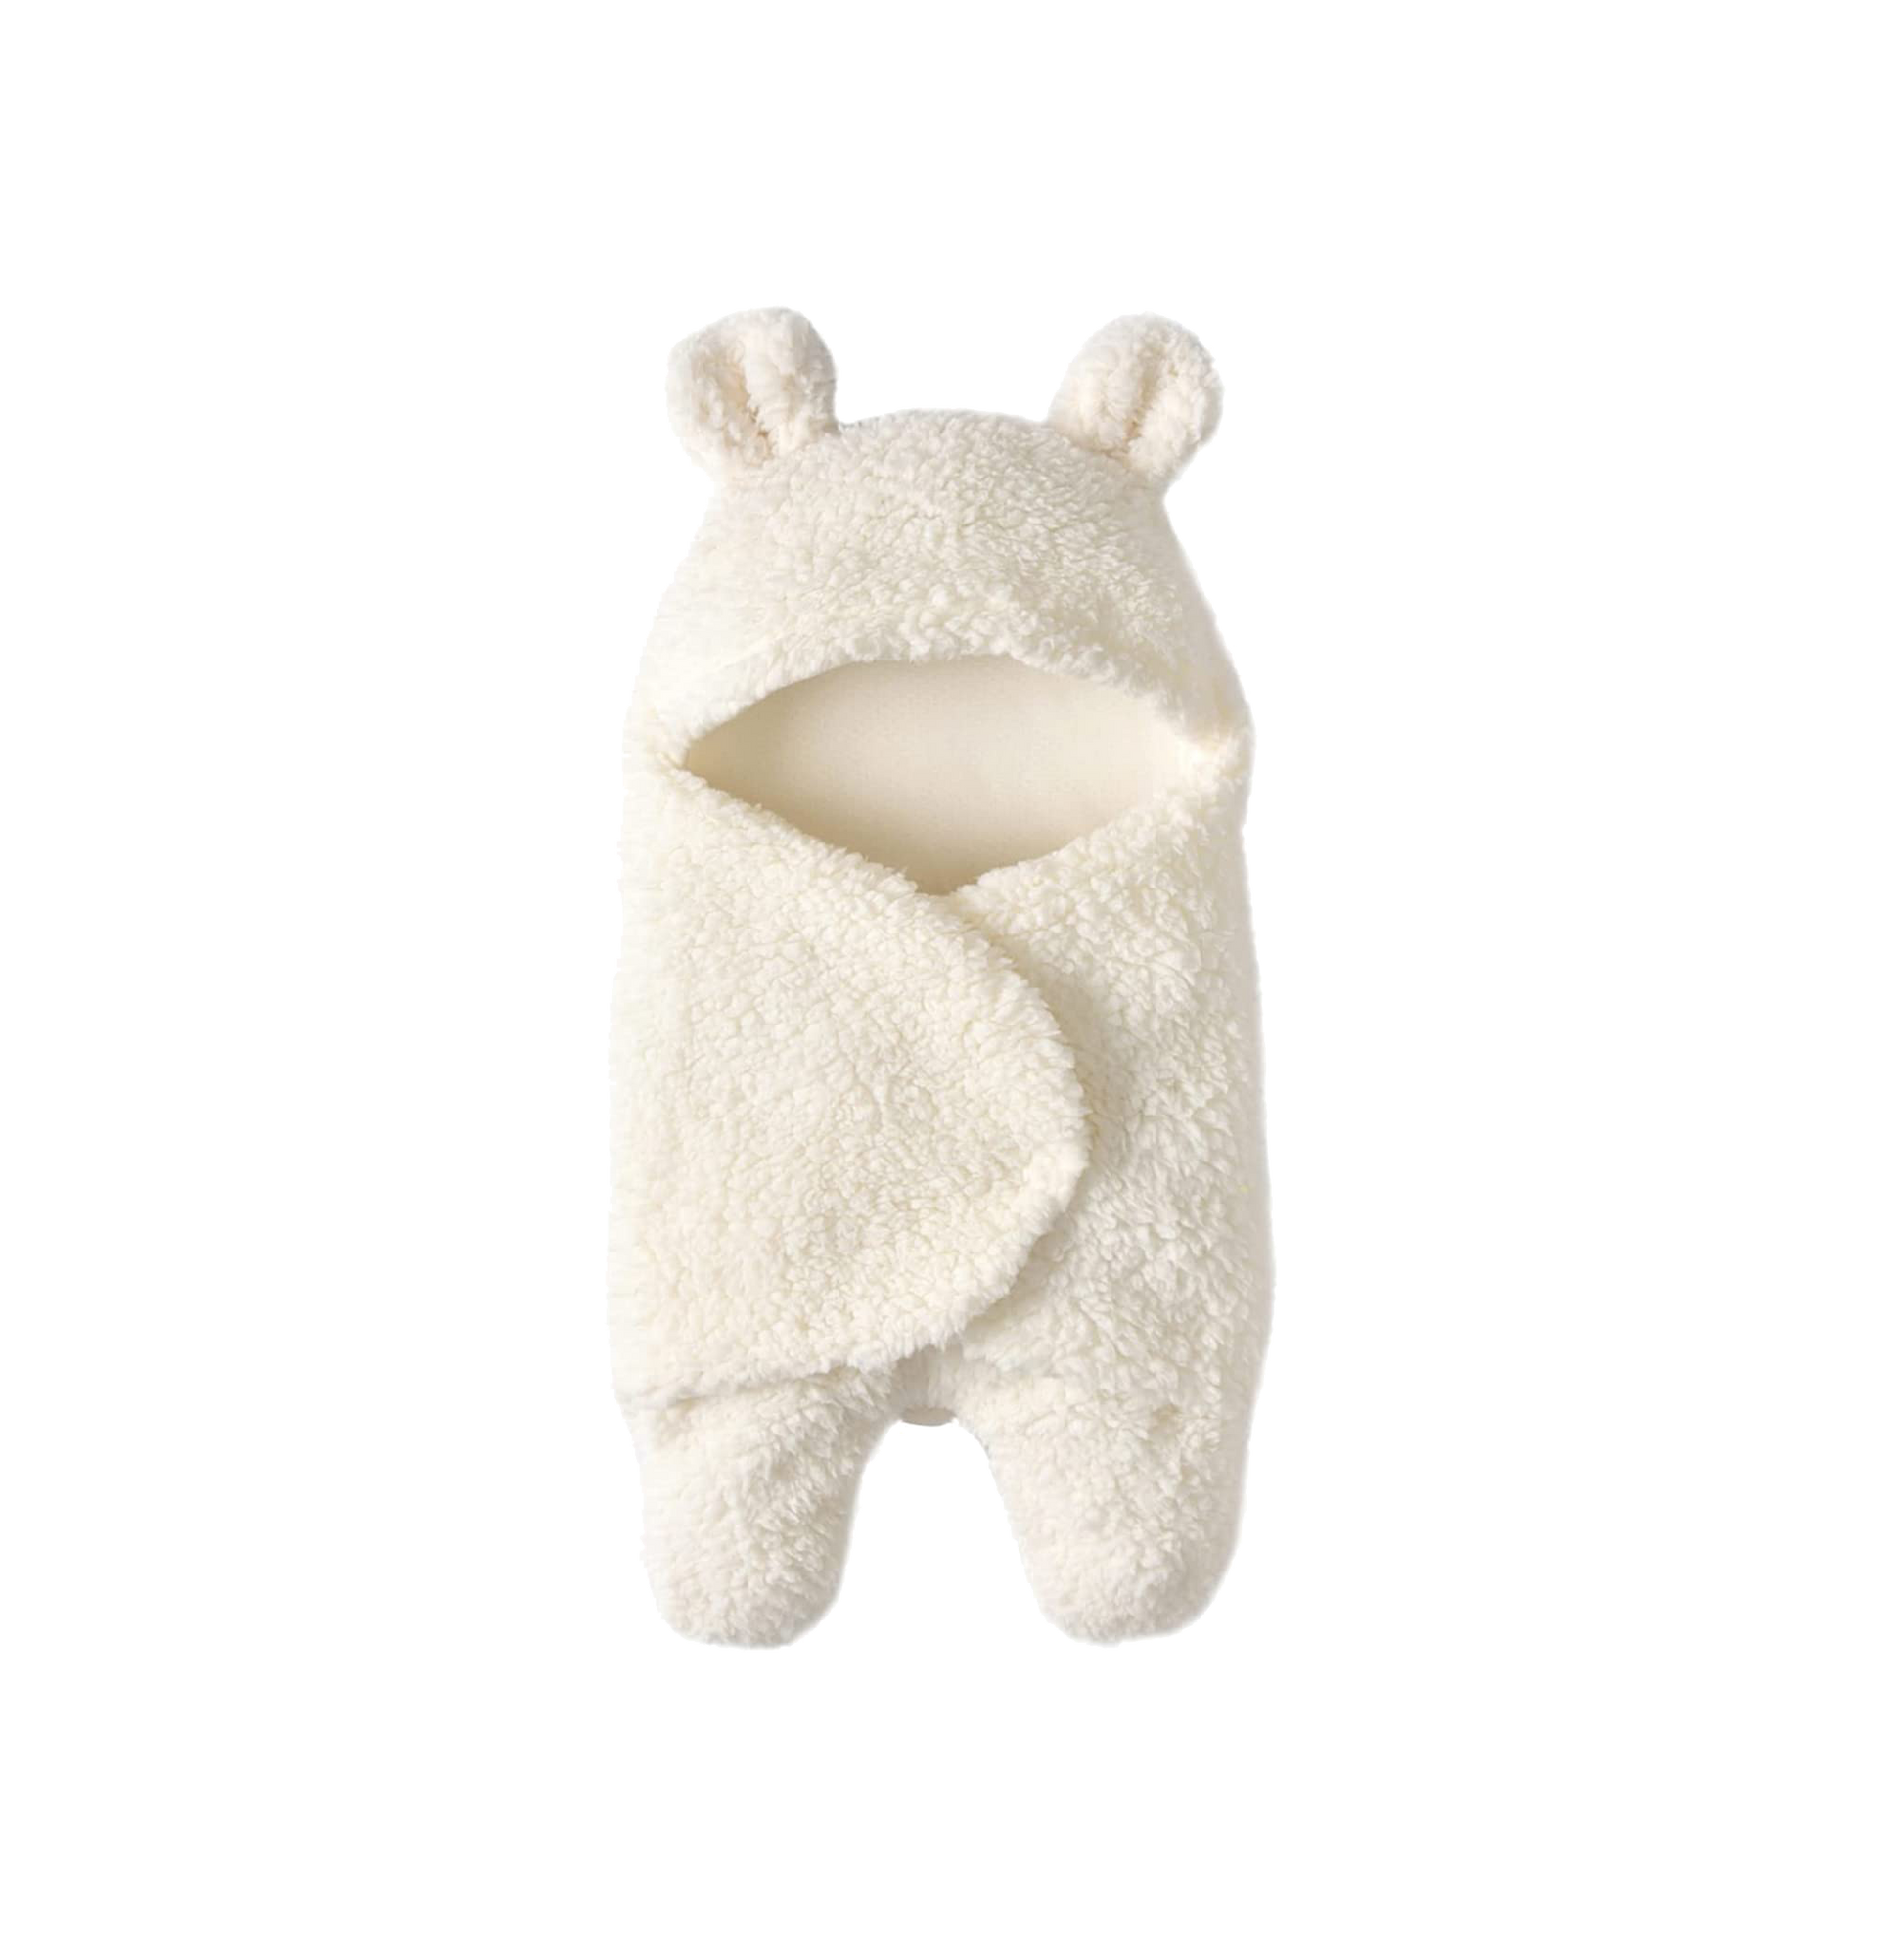 Baby Swaddle Cotton Plush Sleeping Blanket, Ages 0-6m